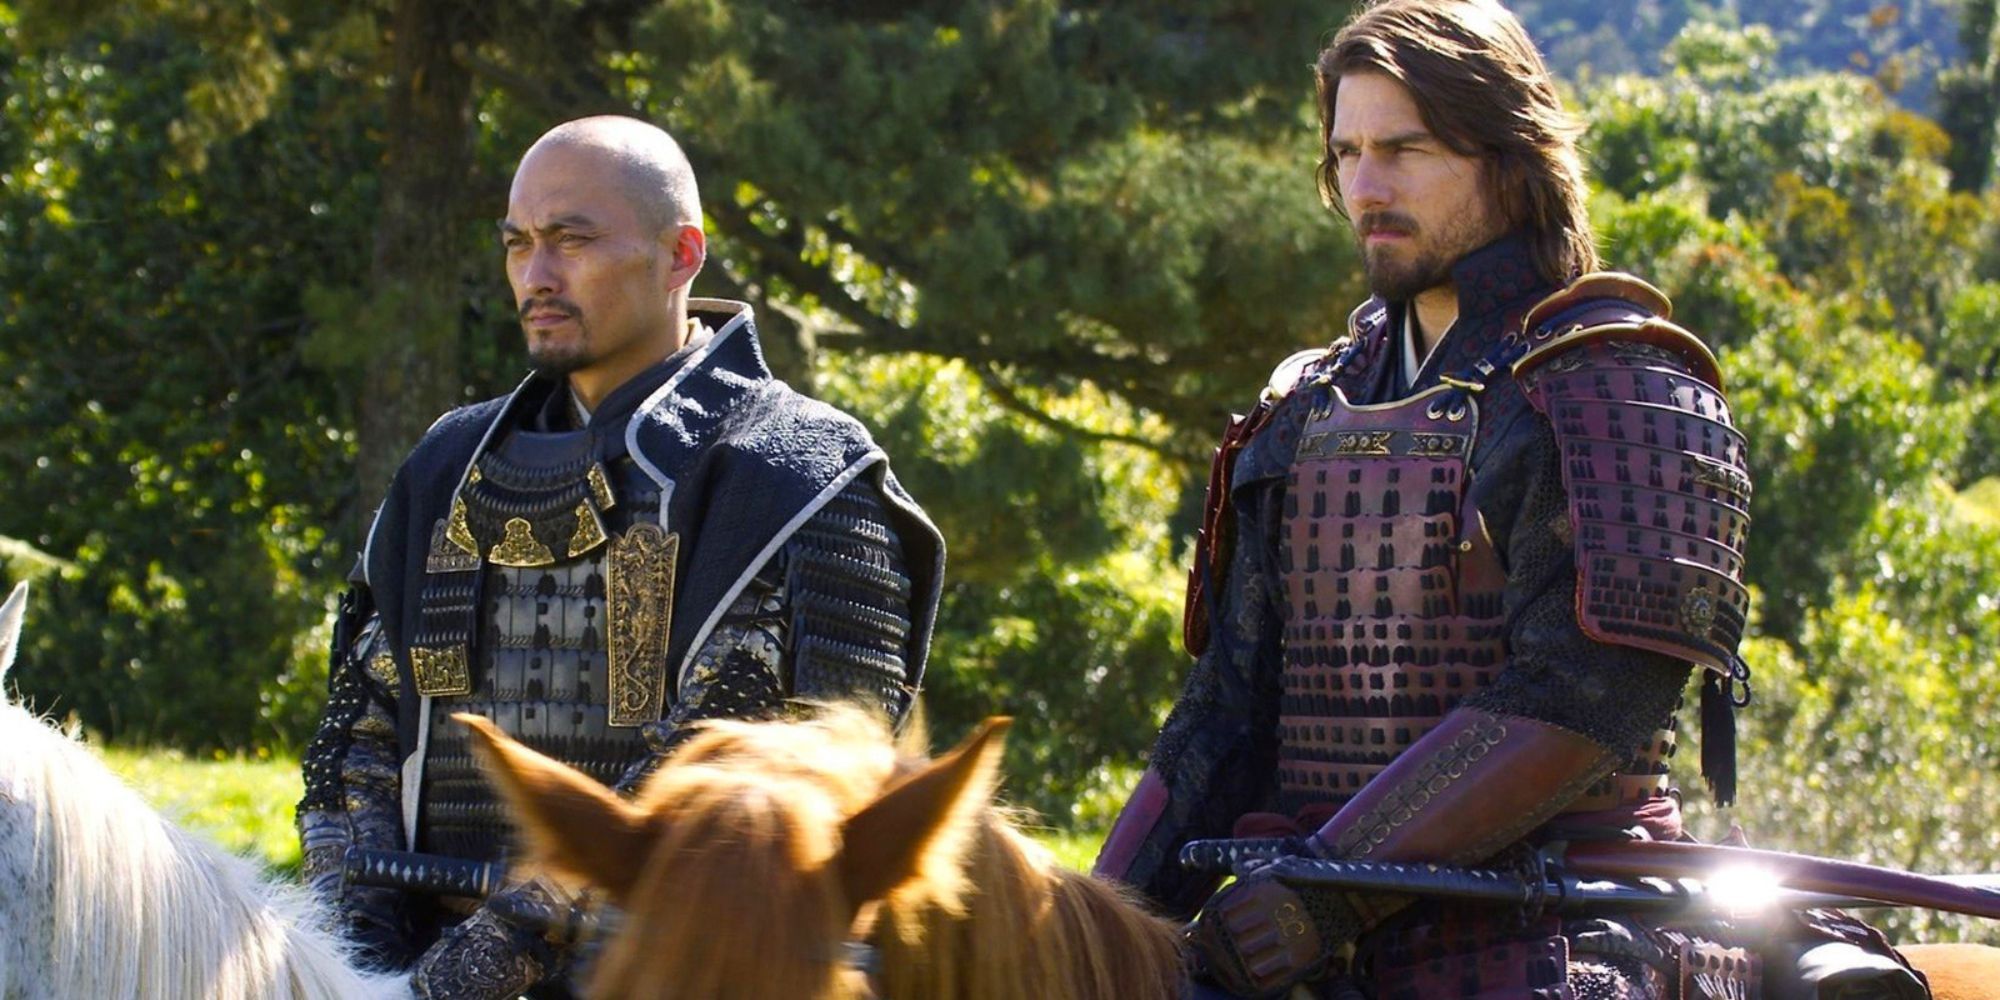 Tom Cruise as Nathan Algren and Ken Watanabe as Mortisugu Katsumoto ride together in The Last Samurai 